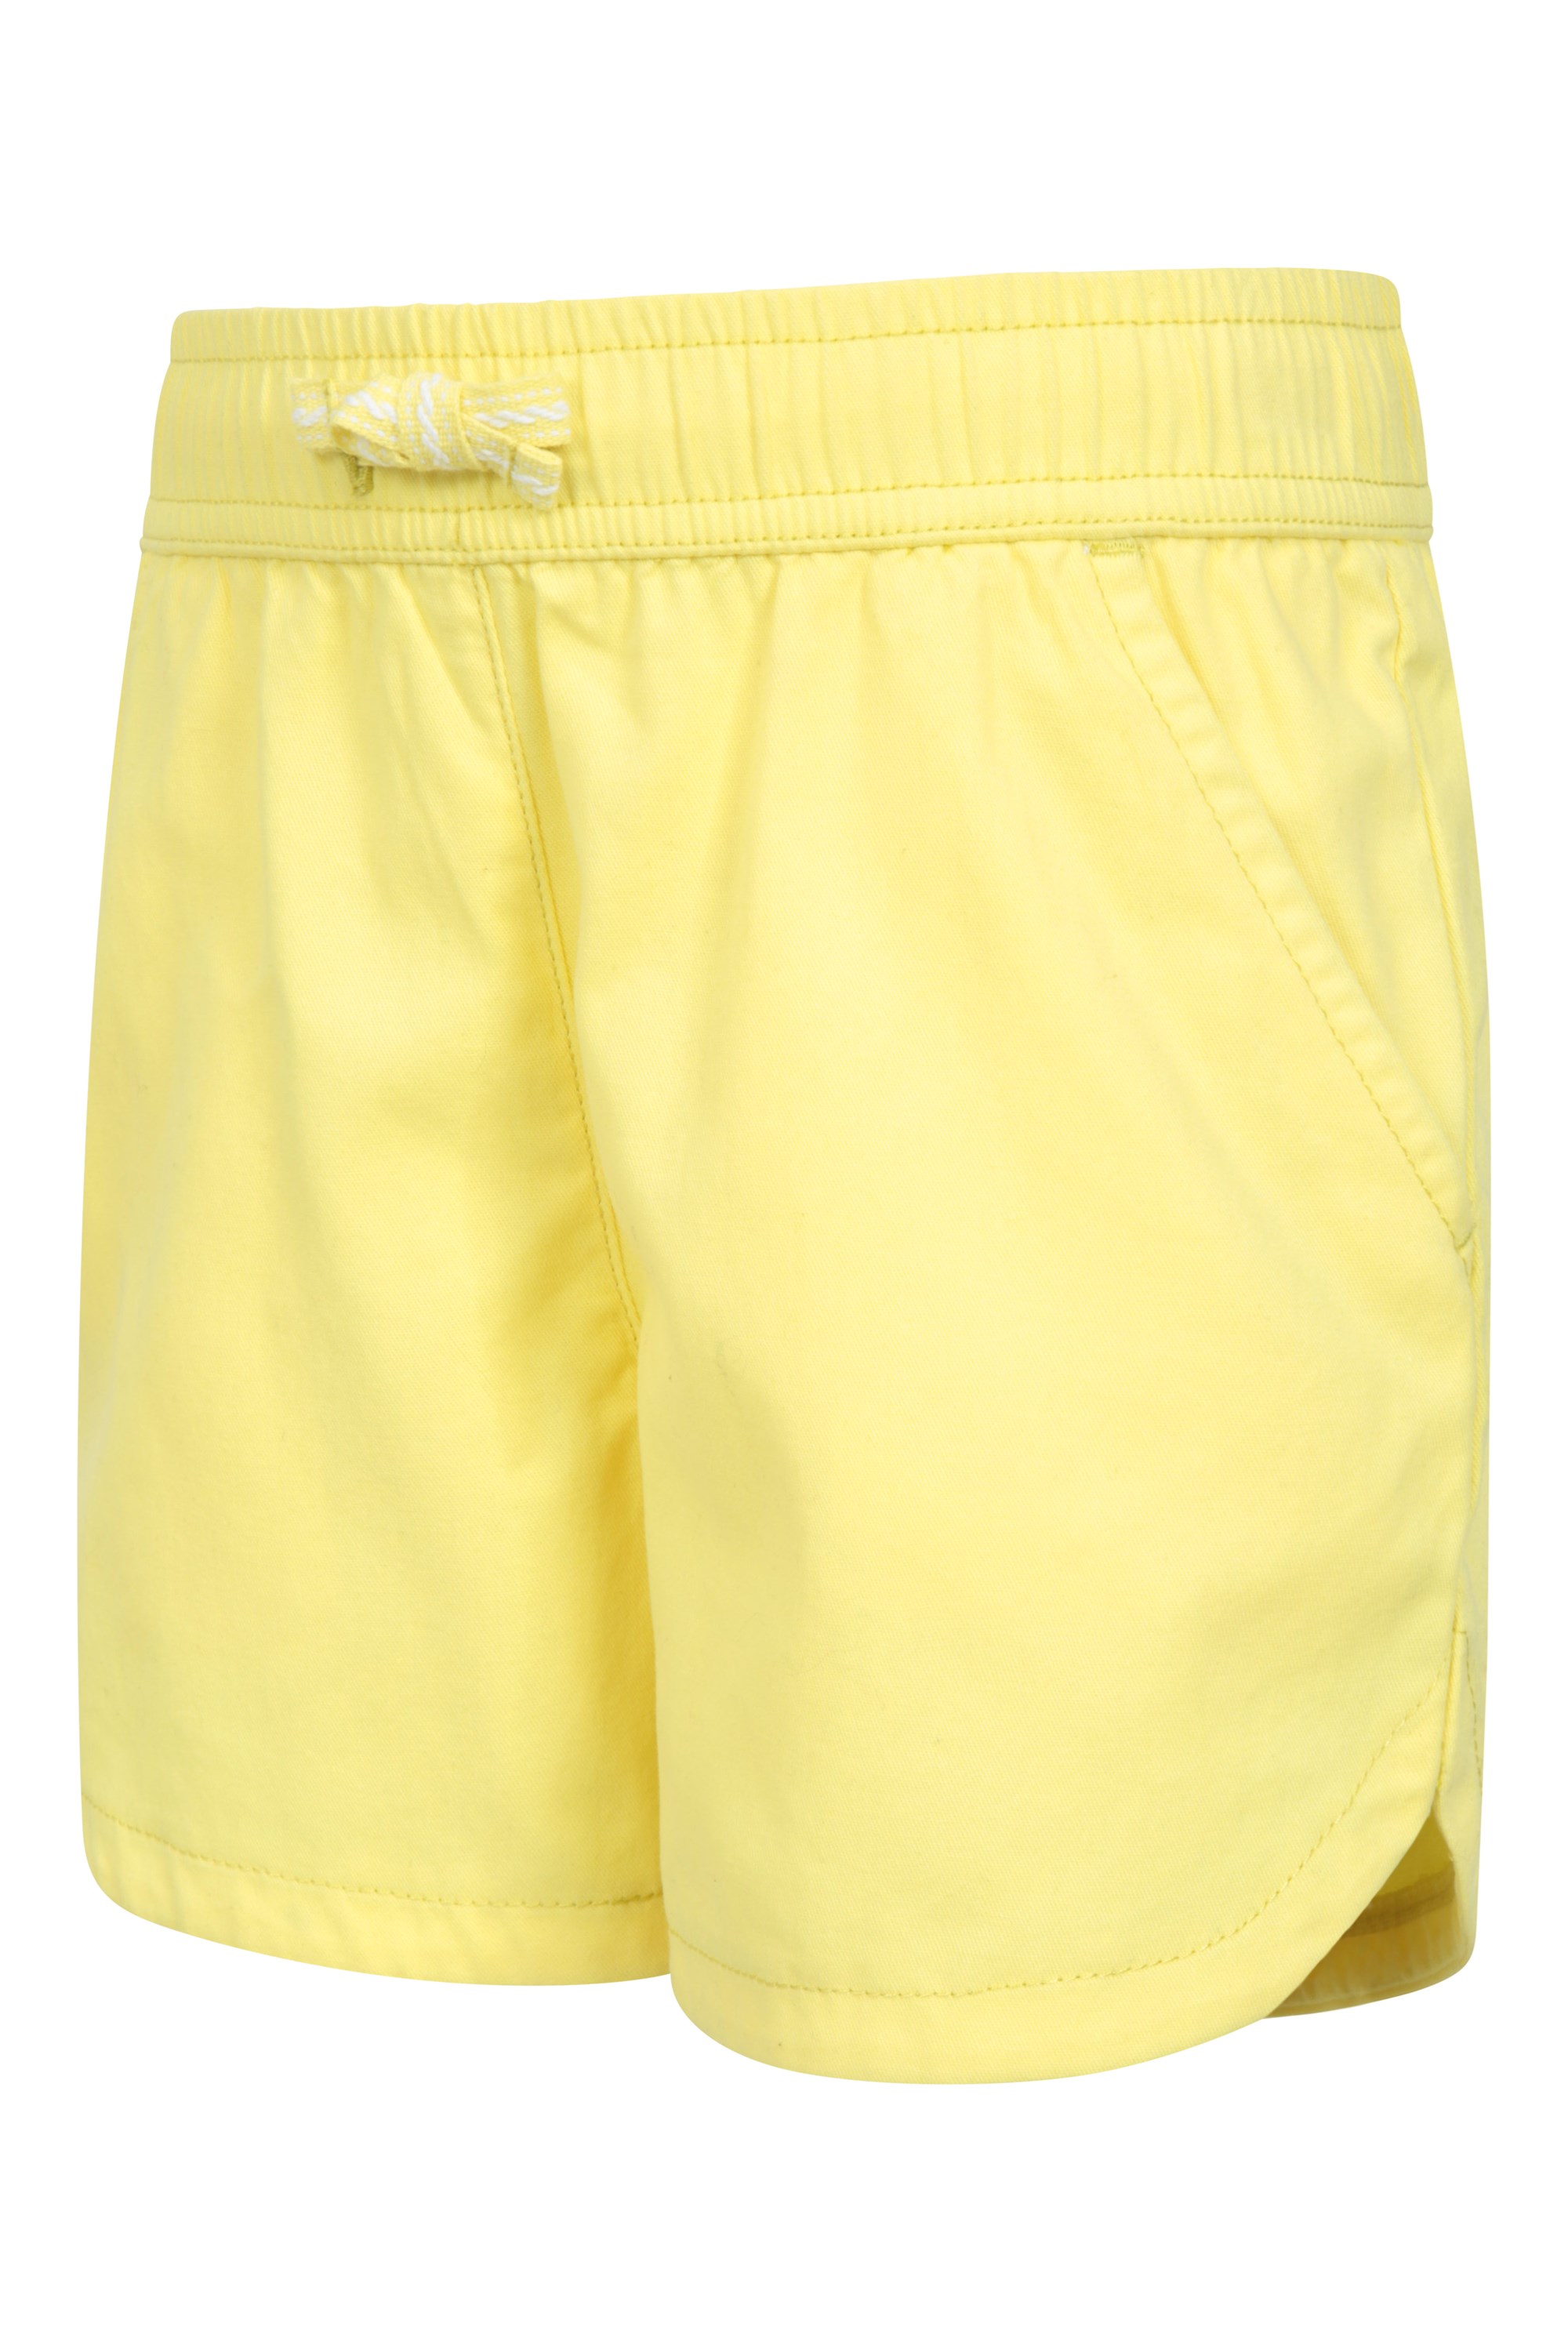 Mountain Warehouse Girls Patterned Board Lightweight Shorts w/ Adjustable Waist 